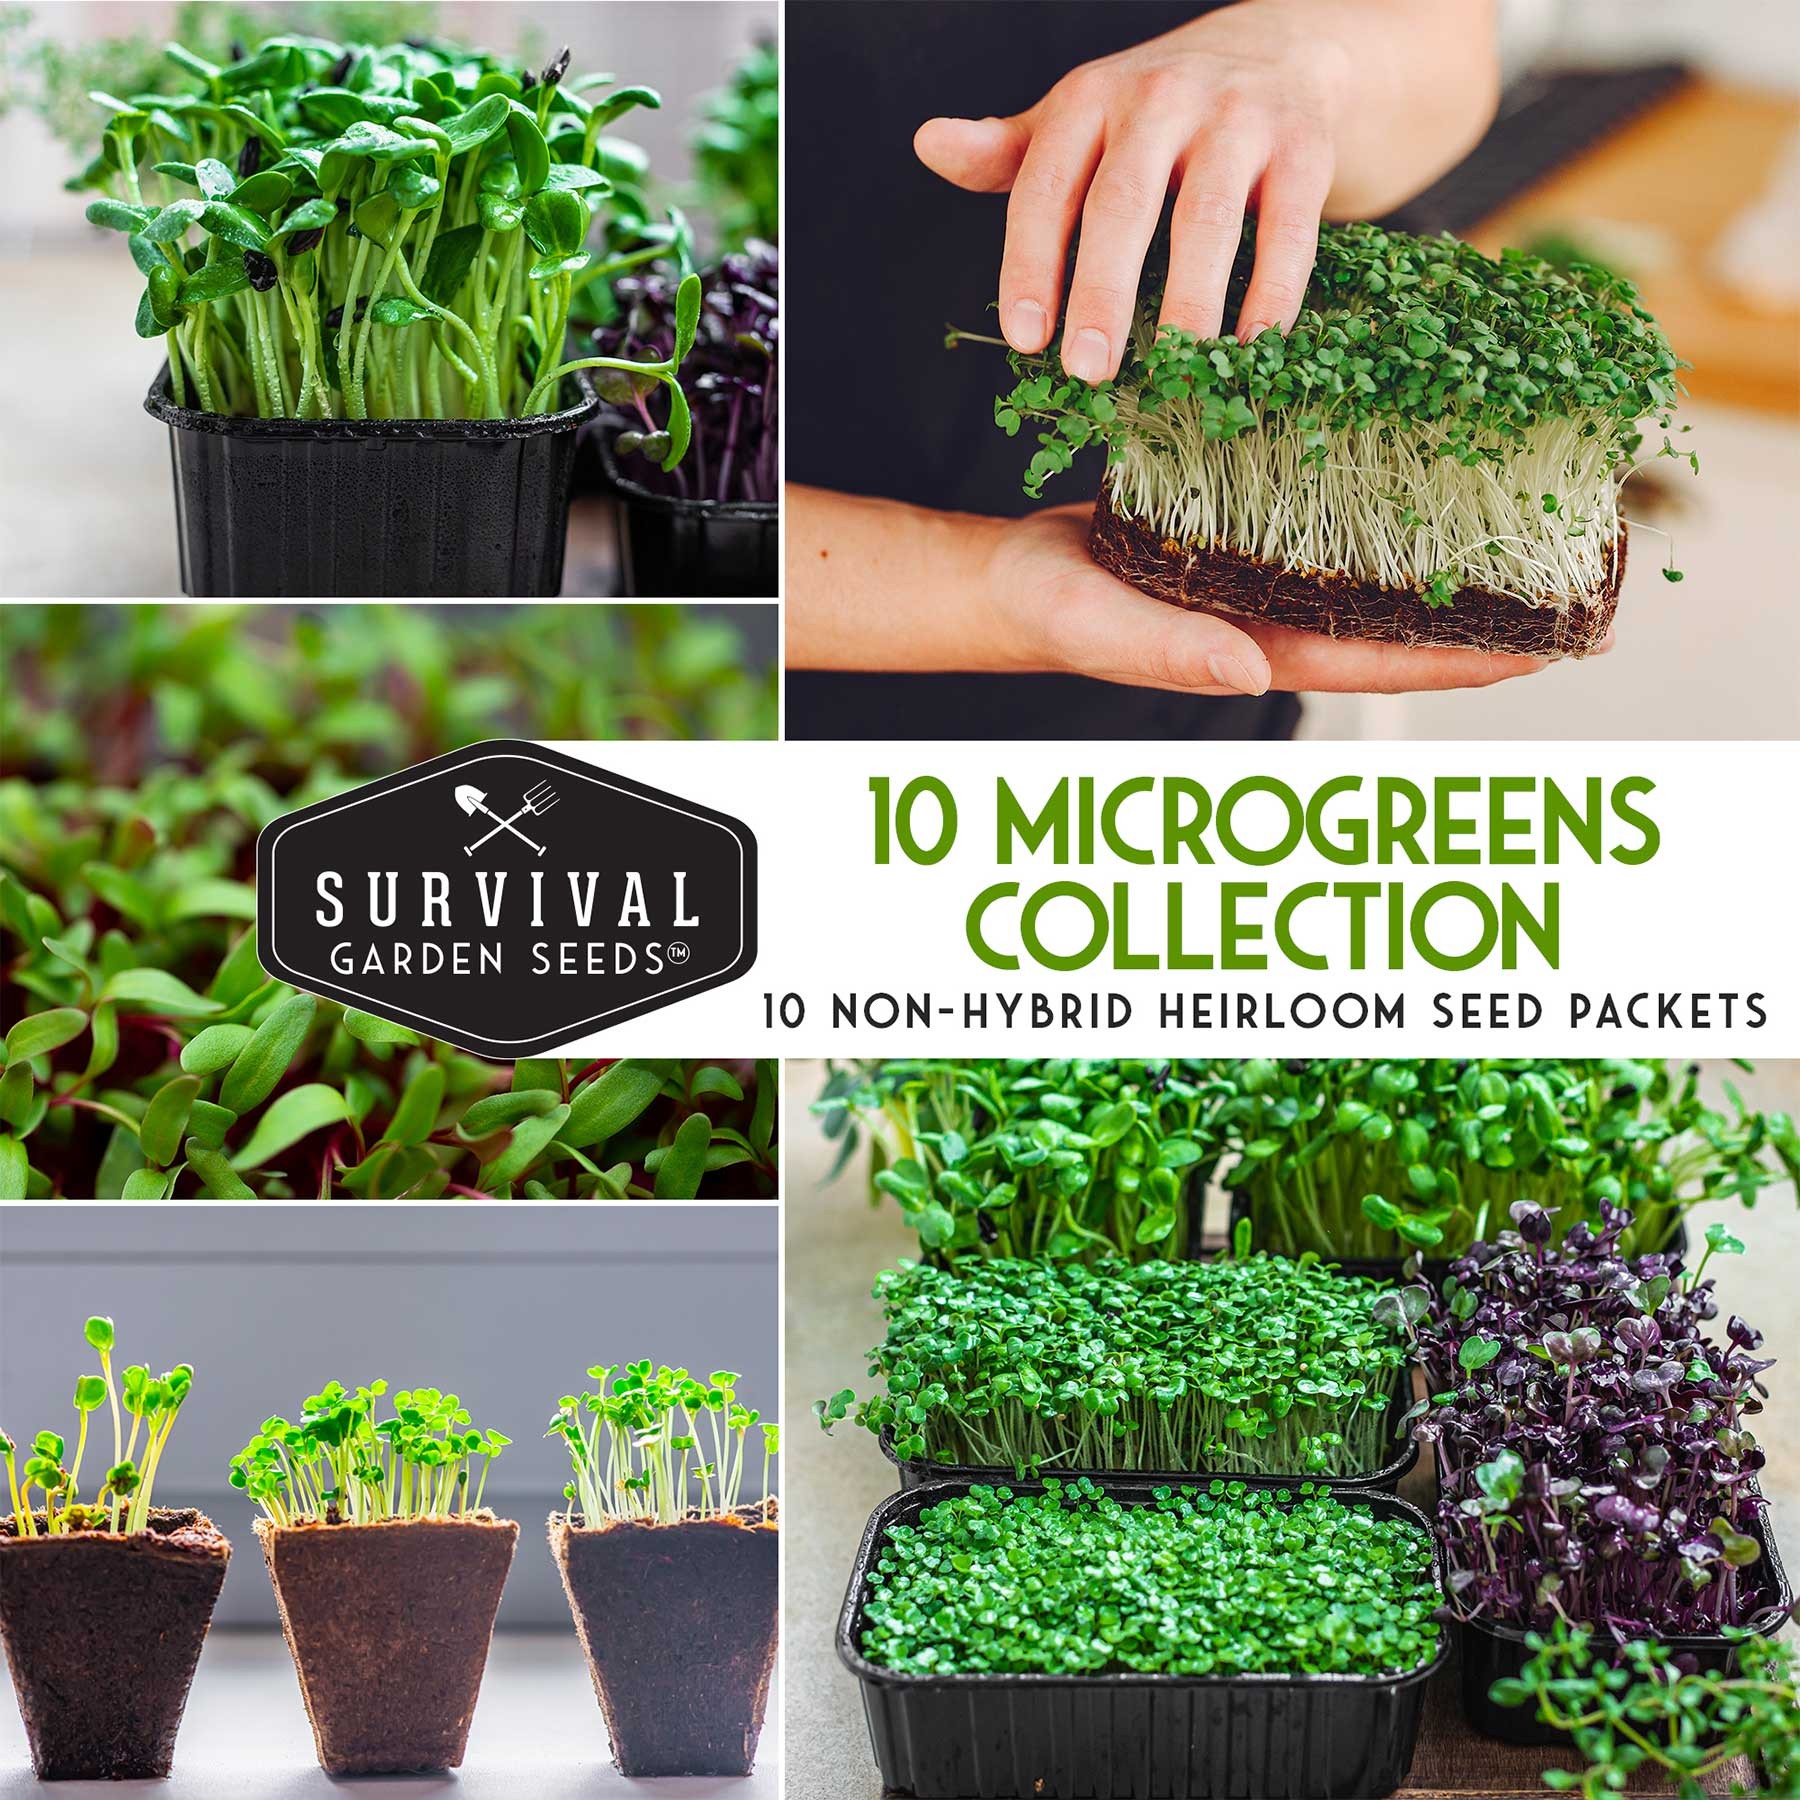 5 Microgreens Seed Collection